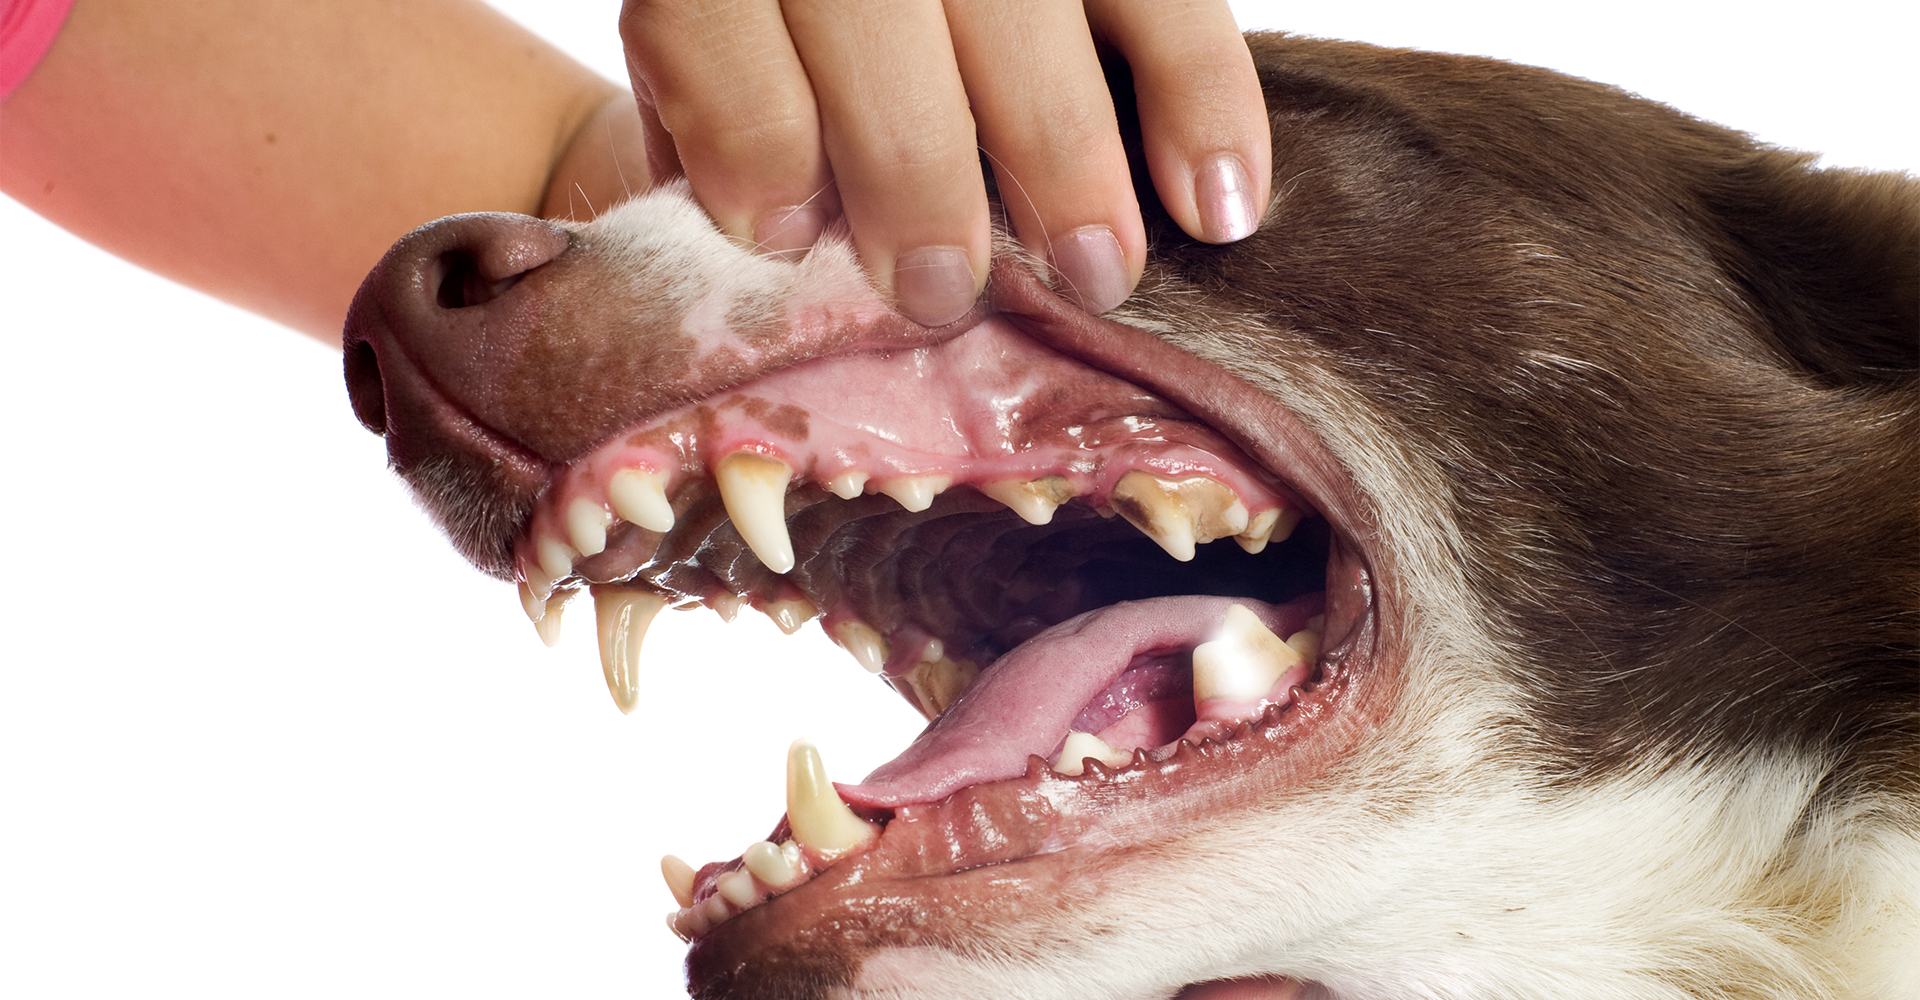 Small Animal Dentistry